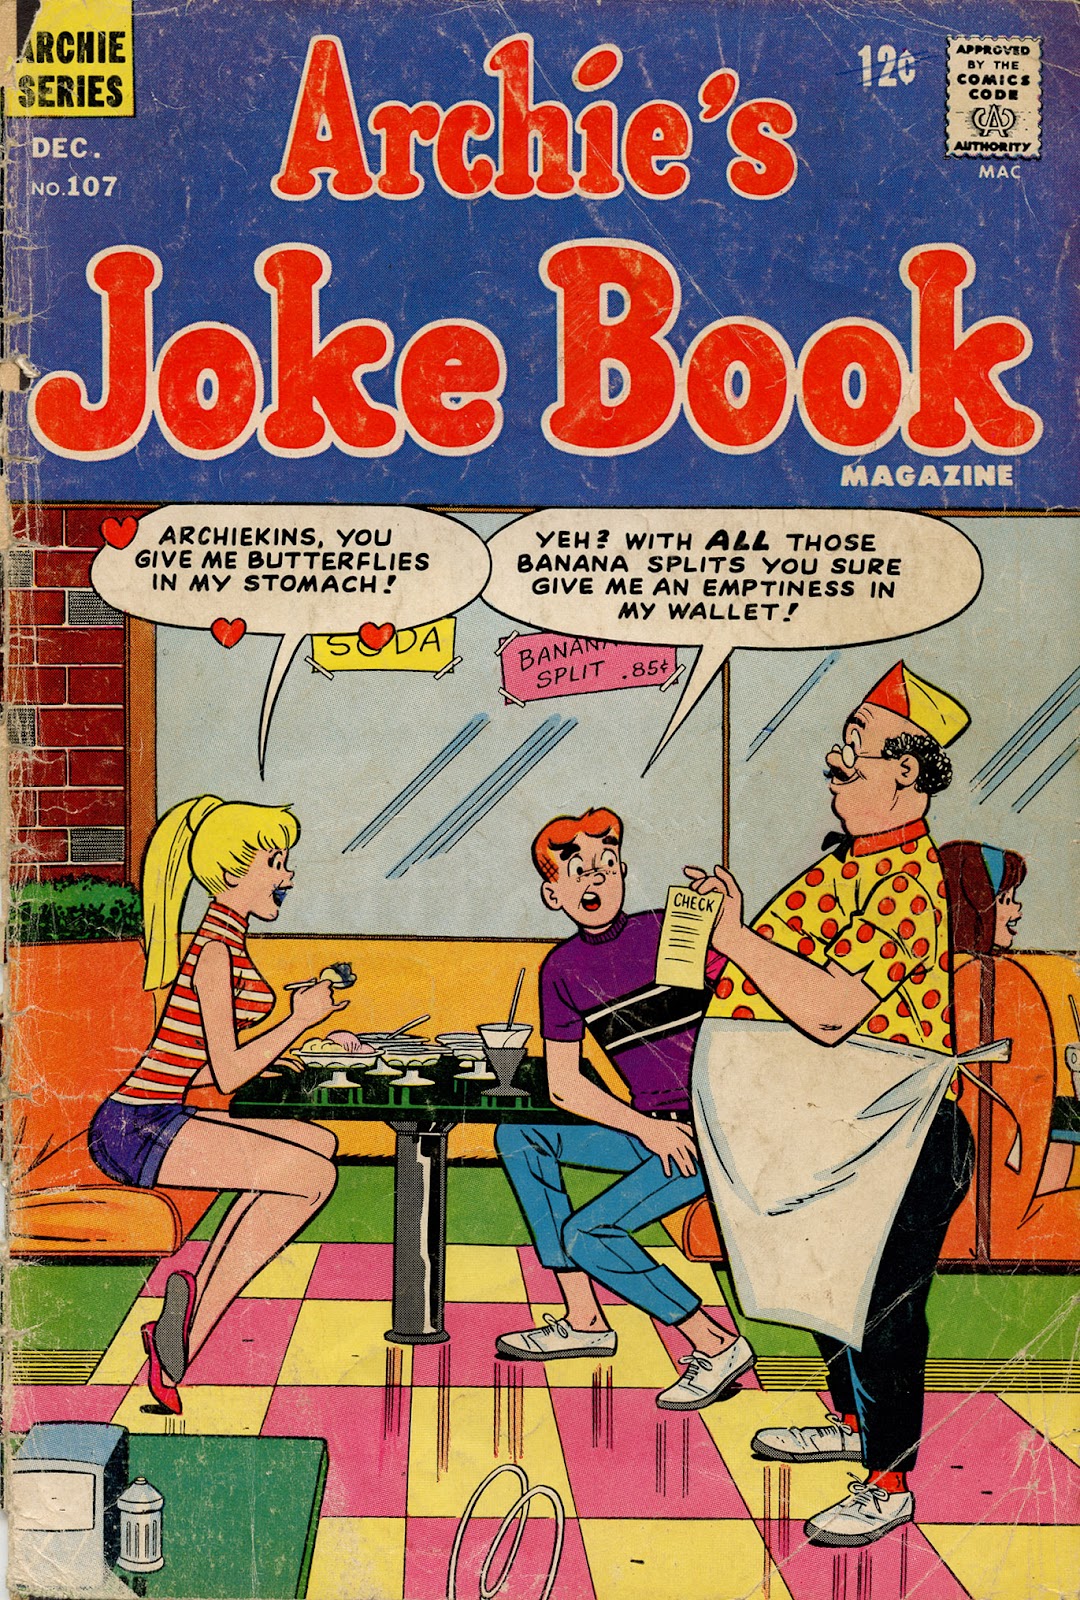 Archie's Joke Book Magazine issue 107 - Page 1